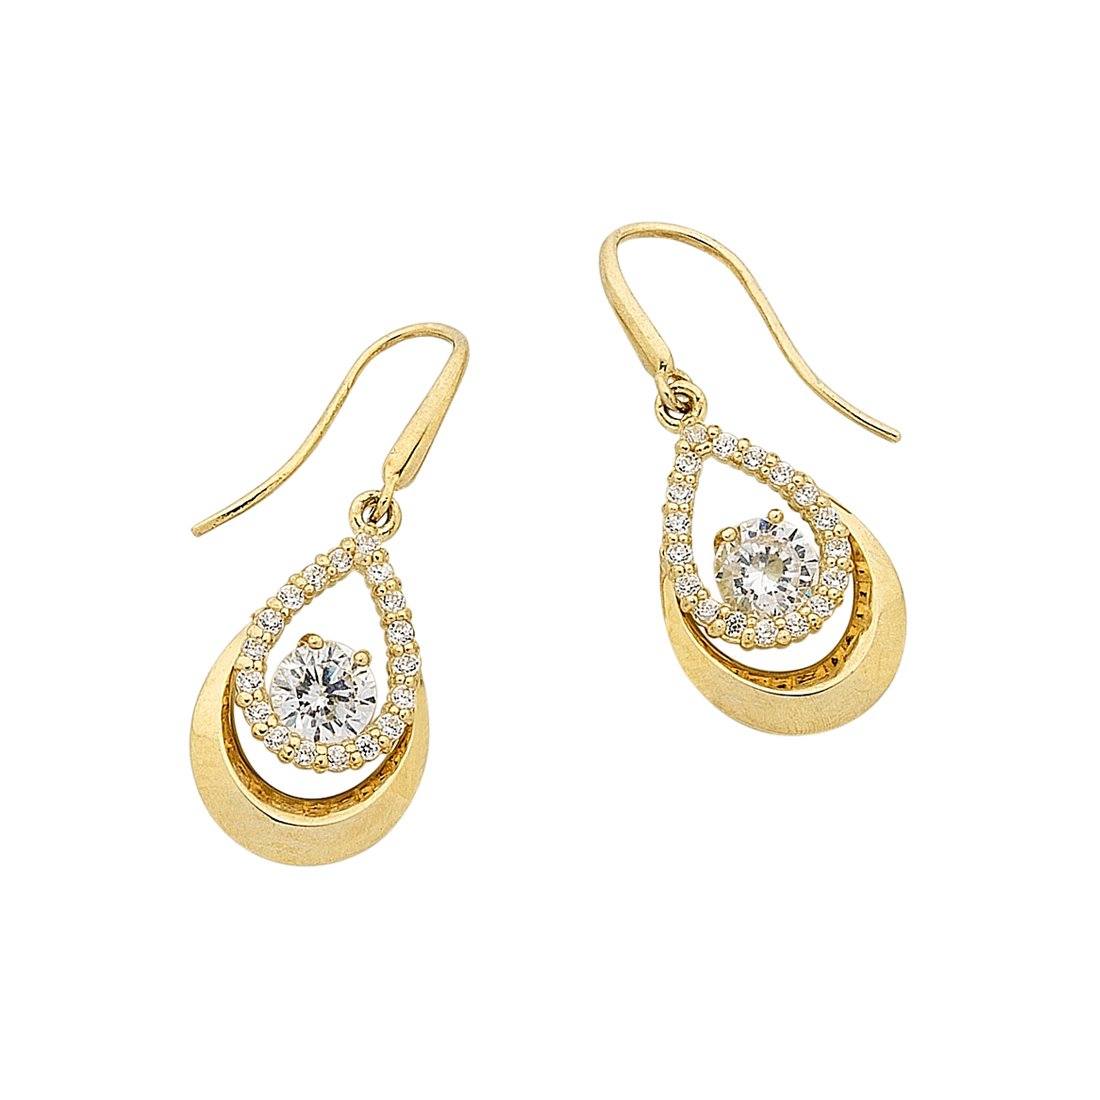 9ct Yellow Gold Pear Shaped Drop Earrings Earrings Bevilles 